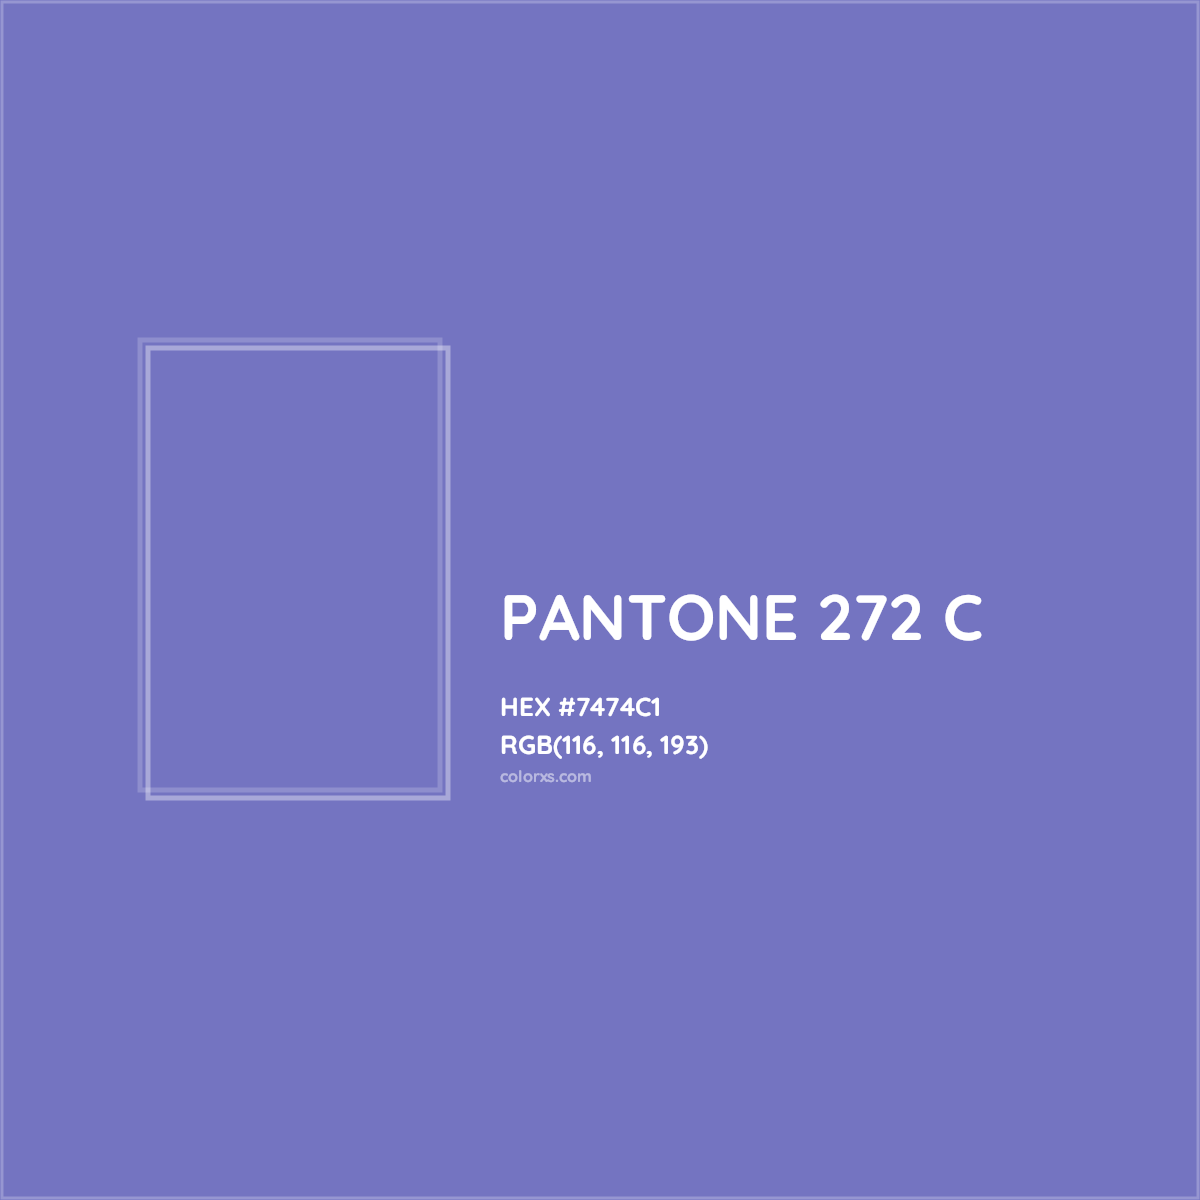 HEX #7474C1 PANTONE 272 C CMS Pantone PMS - Color Code